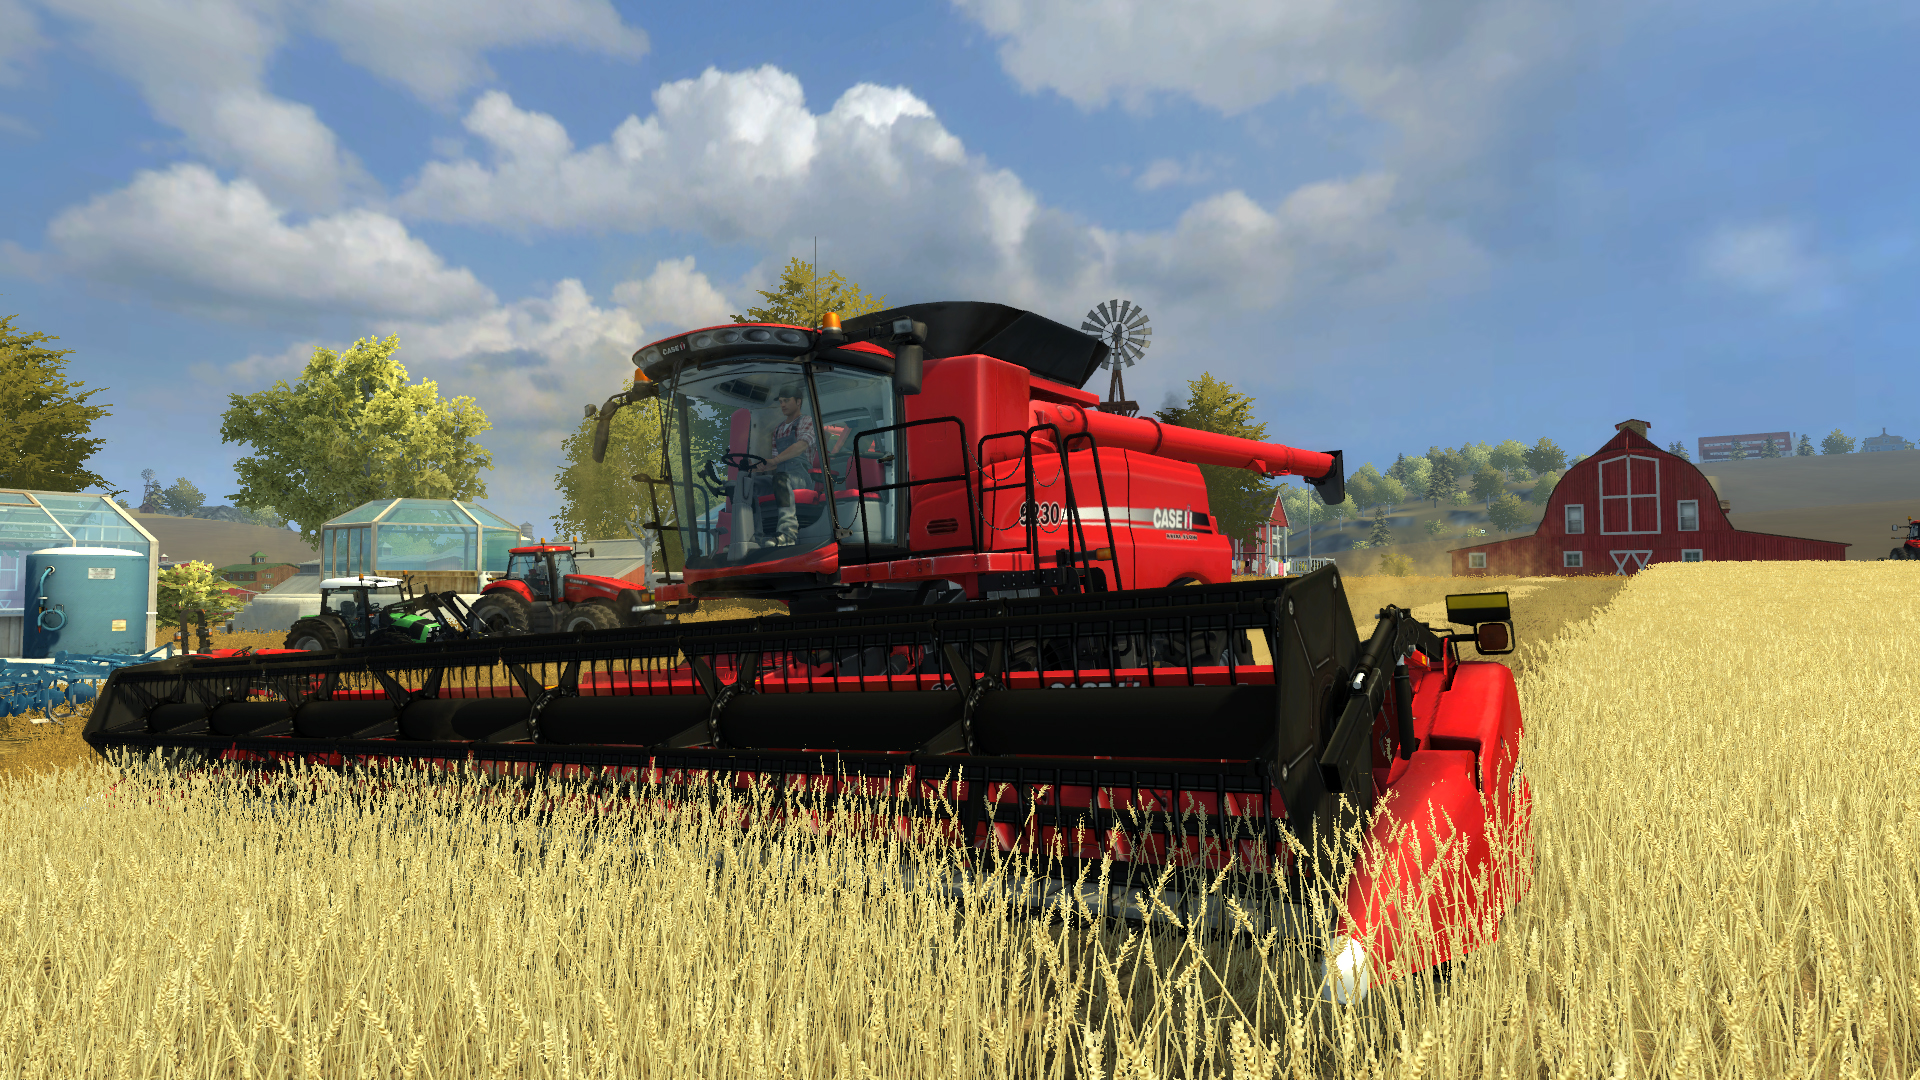 farming simulator for pc